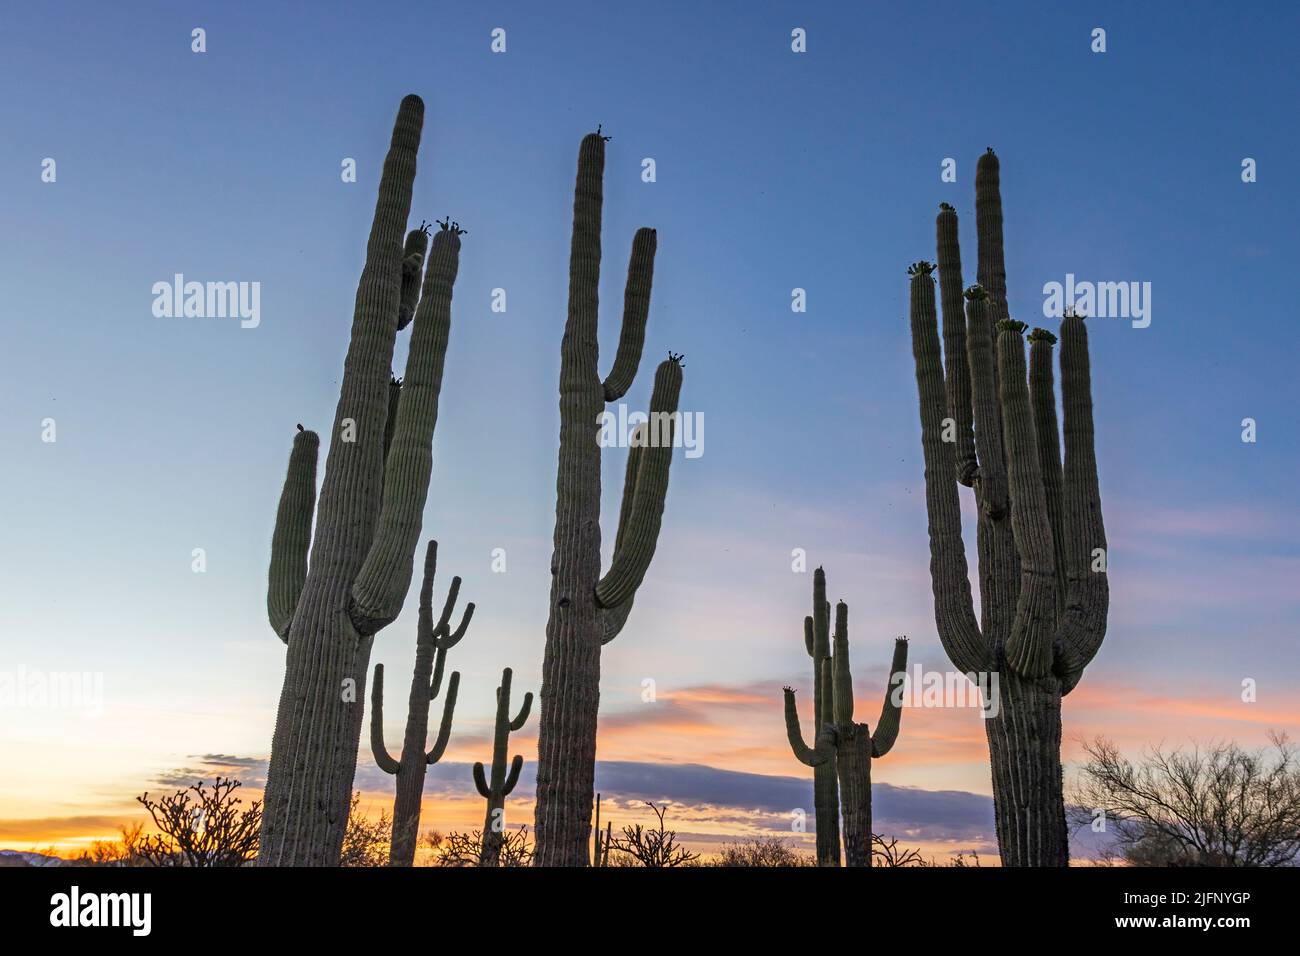 Stand Of Saguaro Cactus In Arizona At Sunrise Stock Photo